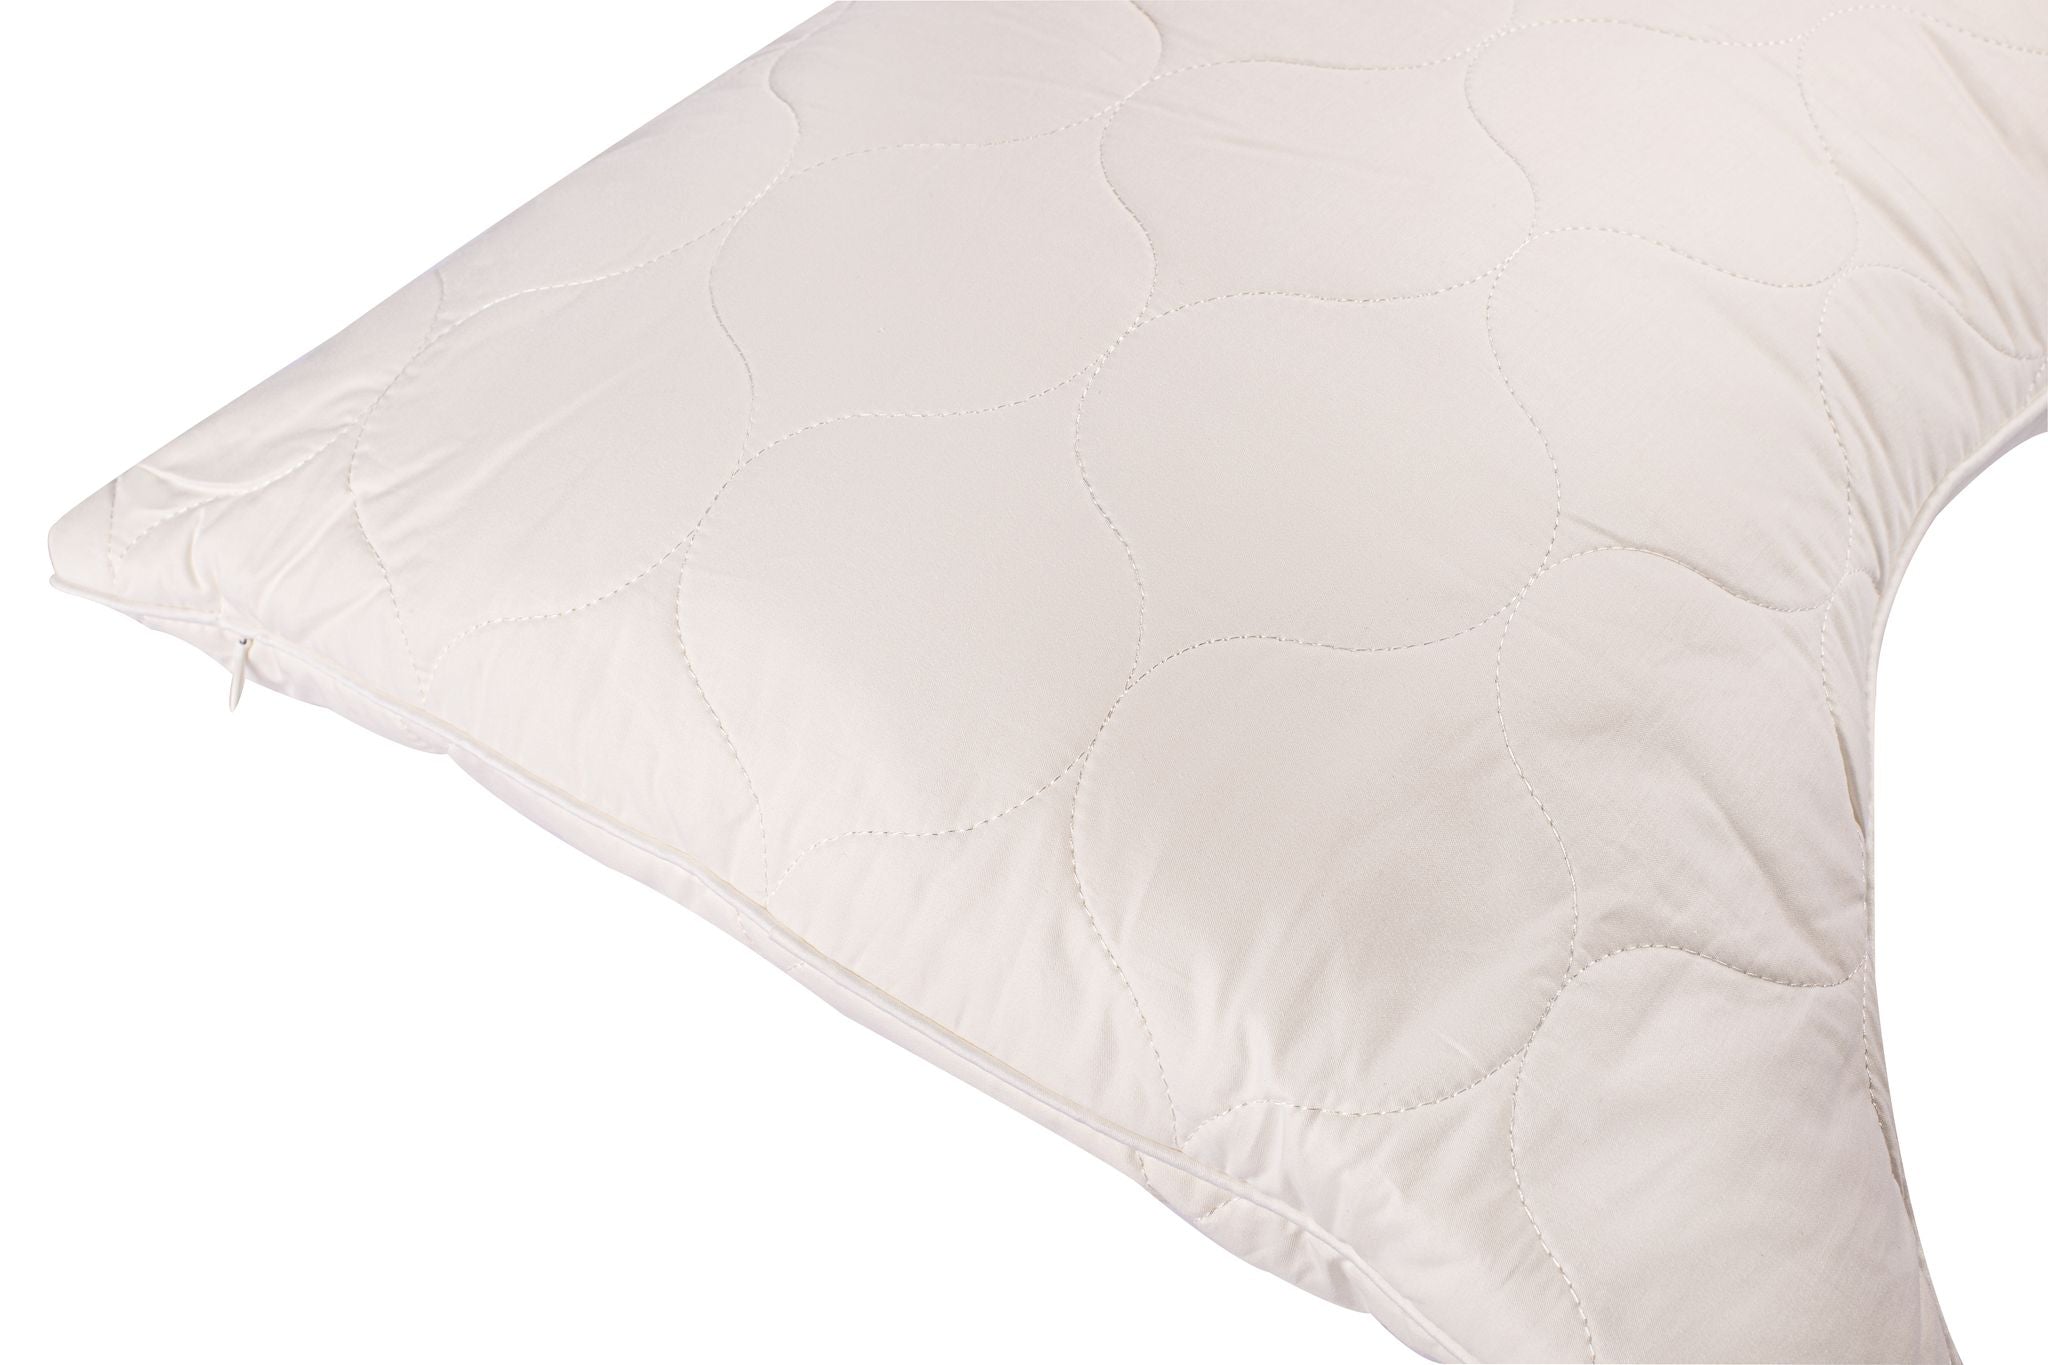 Sleep & Beyond myDual Side Pillow, 100% Natural, Adjustable and Washable Side Wool Pillow, Standard 20x26